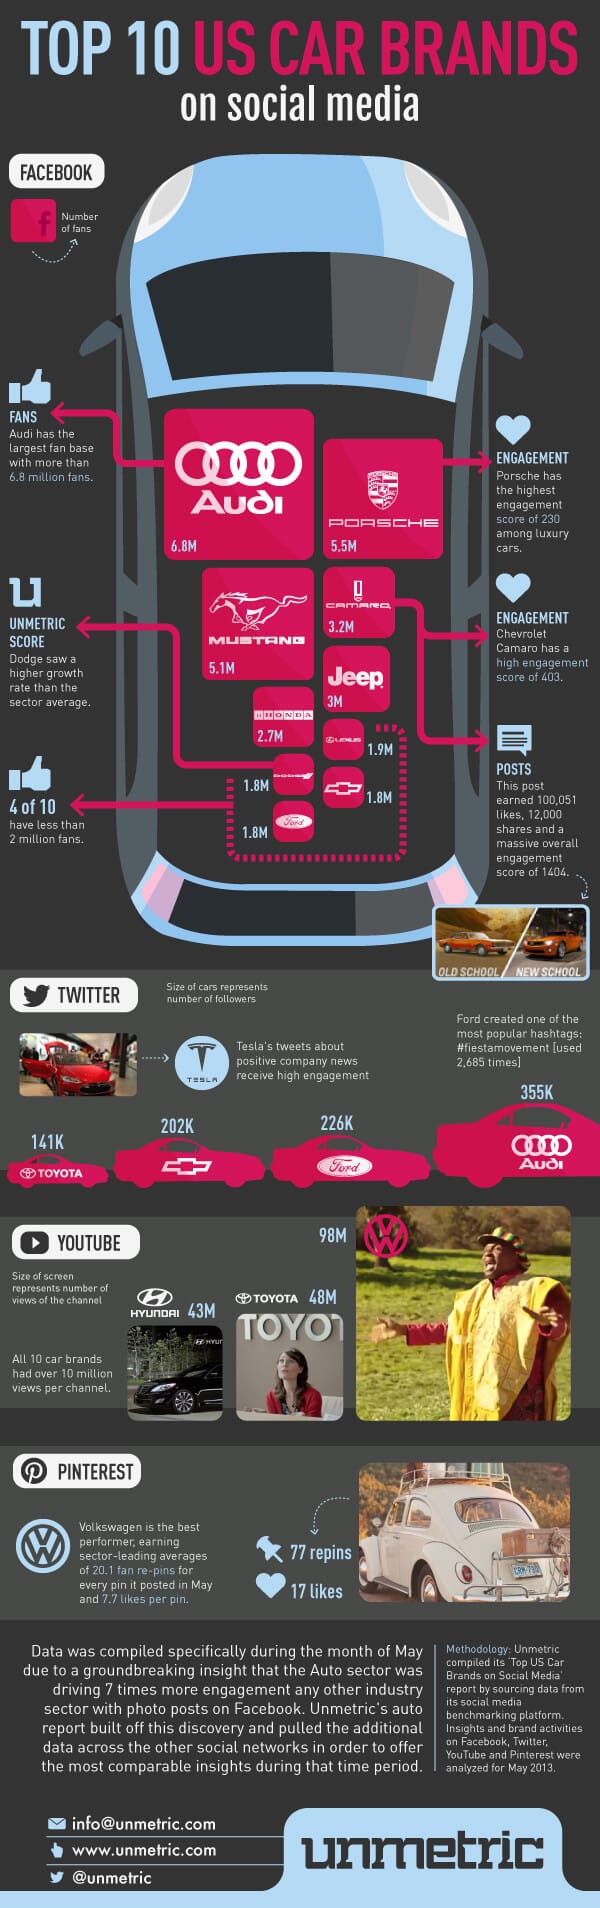 Top 10 US Car Brands on social media